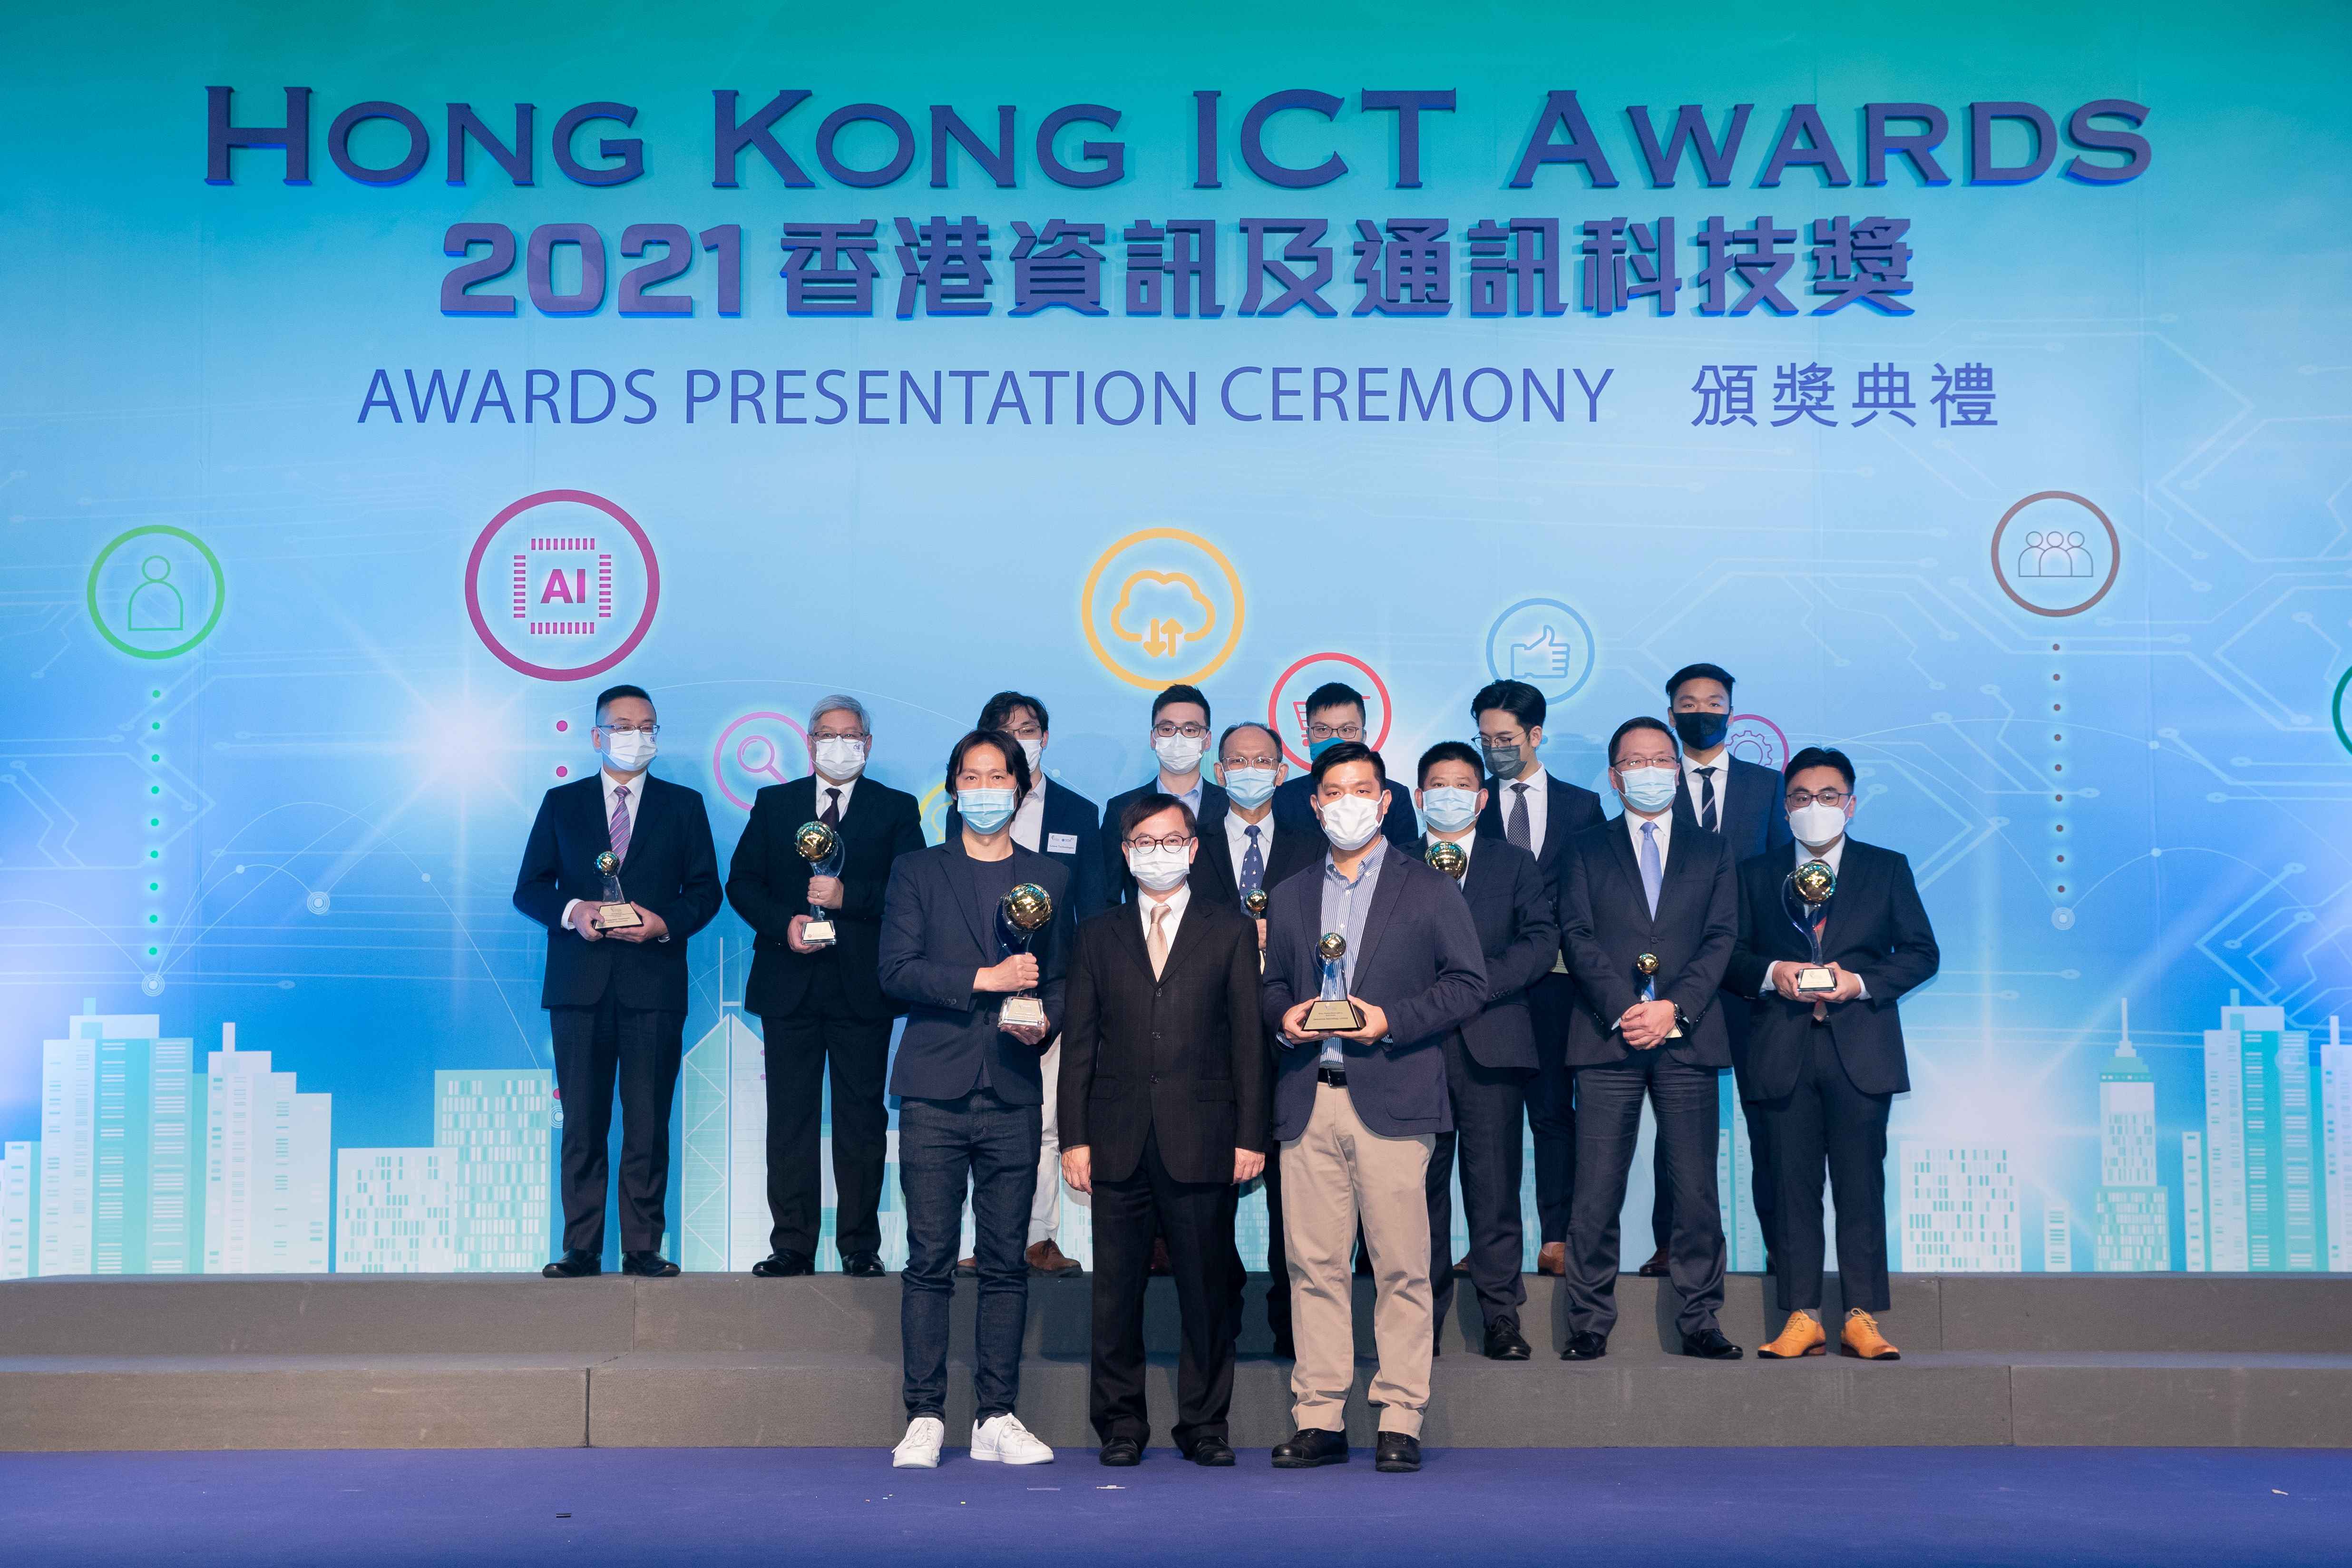 Hong Kong ICT Awards 2021 Smart People Grand Award Winner